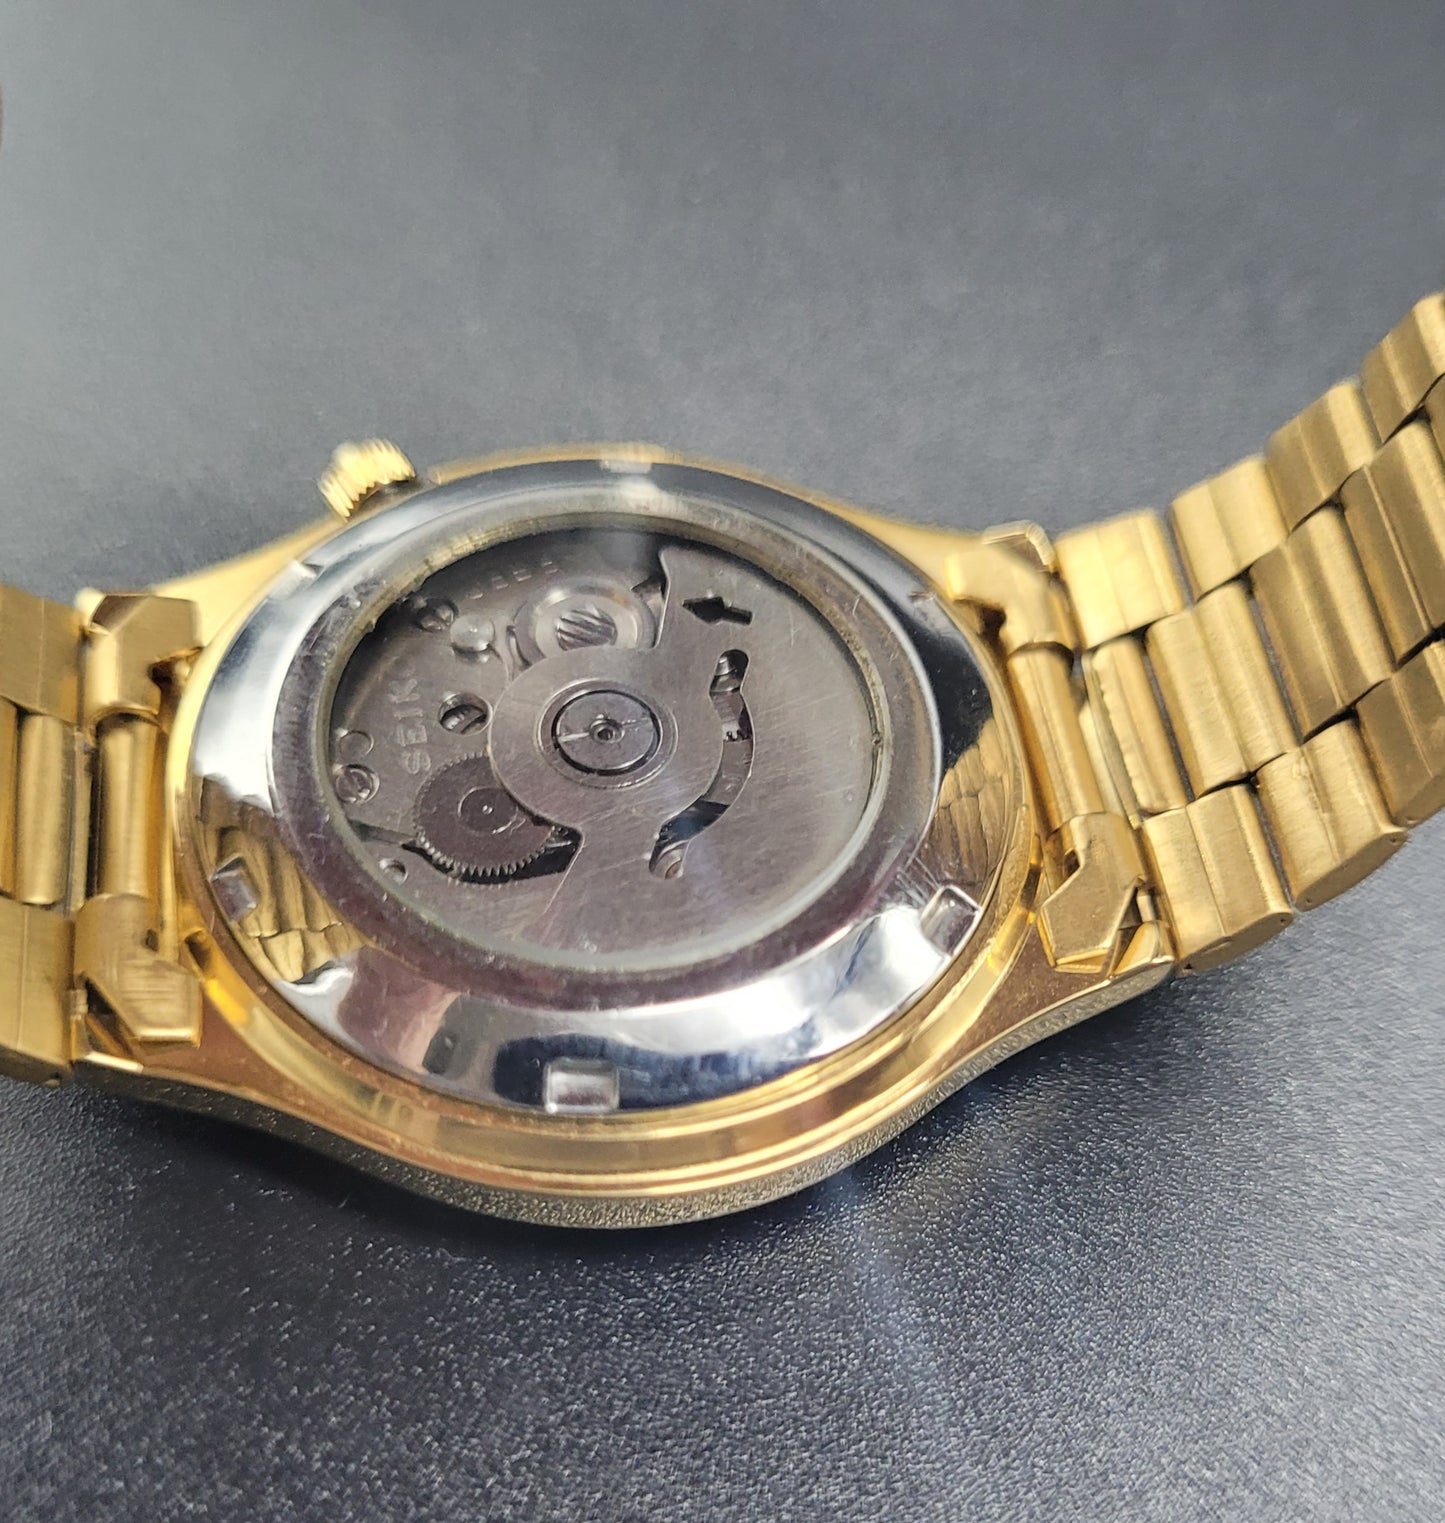 Explore pratyush mukherjee's board "Vintage seiko watches" on Pinterest. See more ideas about seiko watches, seiko, vintage seiko watches.